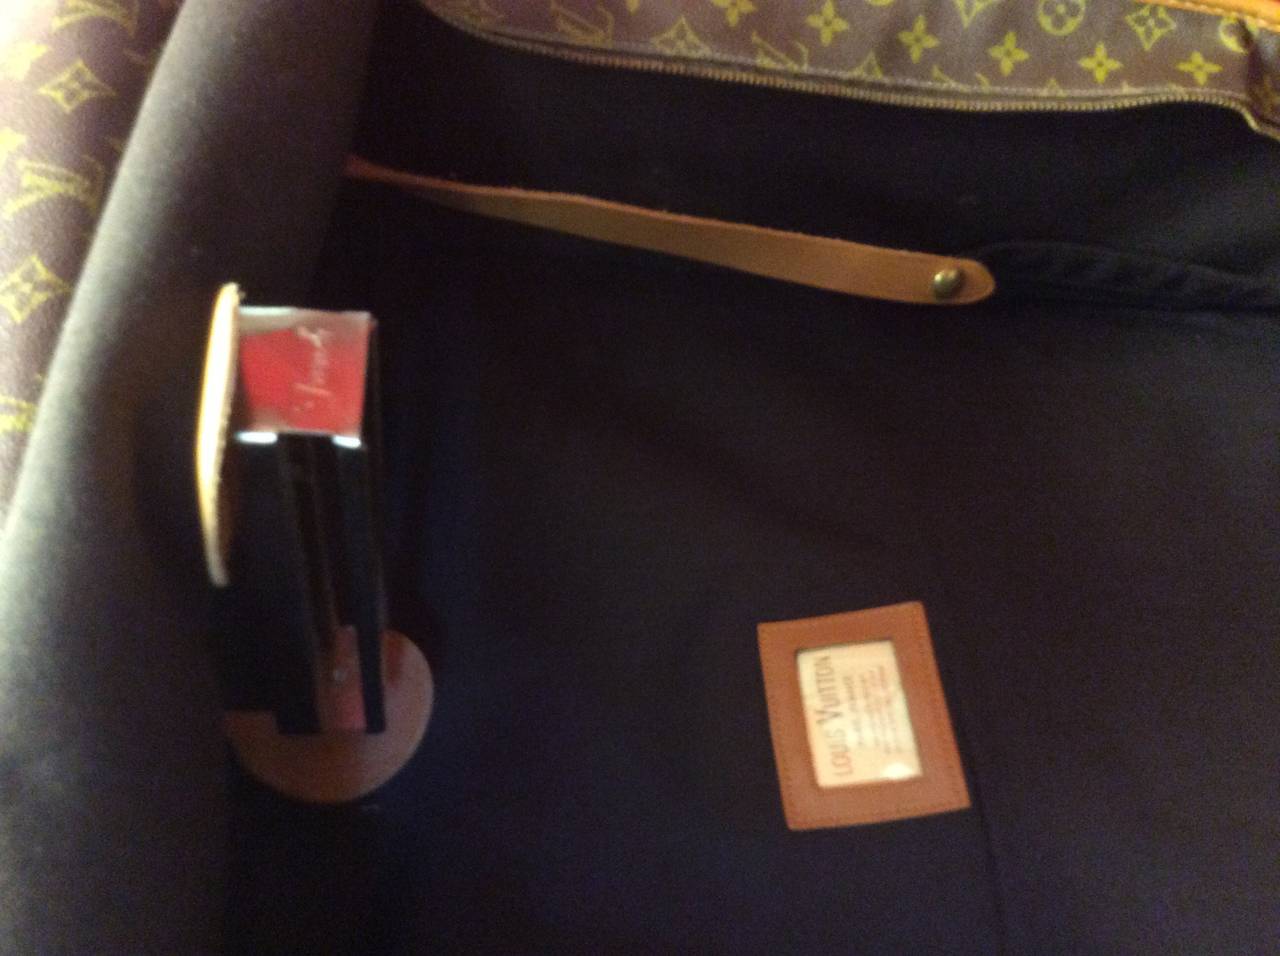 Saks Louis Vuitton Purses - 2 For Sale on 1stDibs  louis vuitton bags saks,  saks louis vuitton bag, saks fifth avenue louis vuitton purses